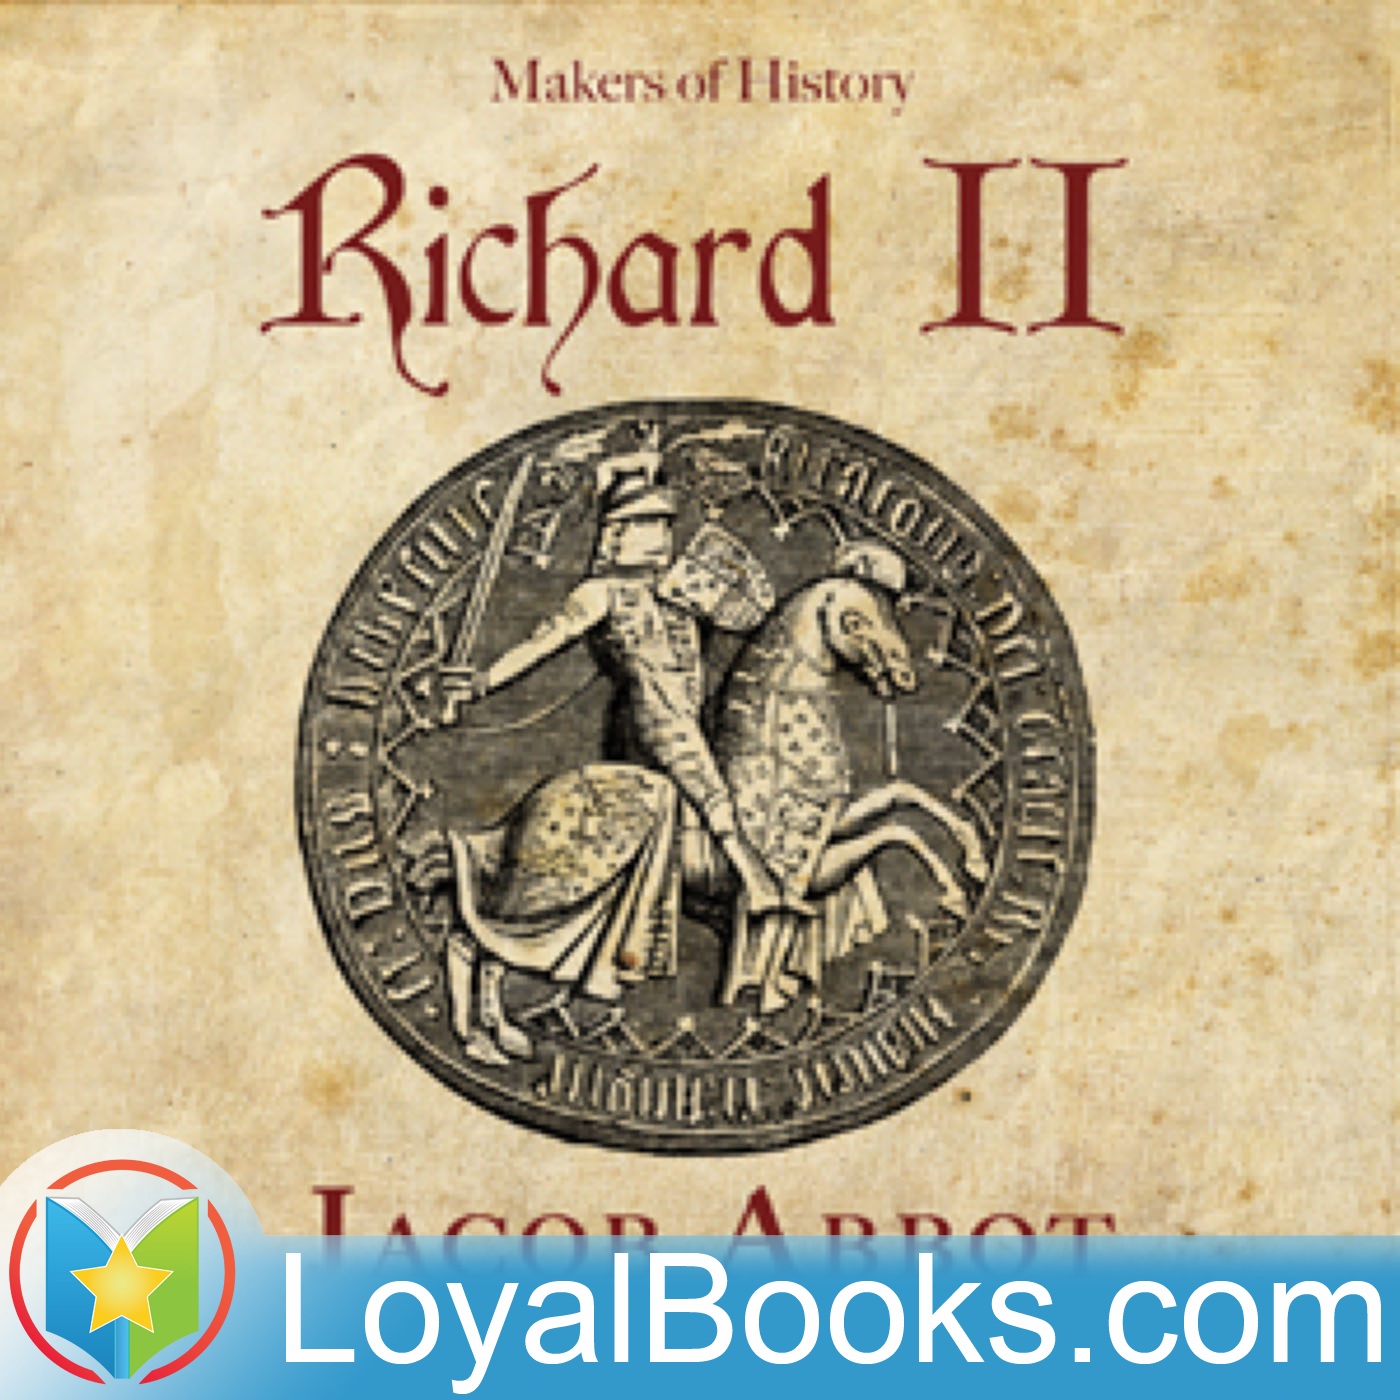 Richard II, Makers of History by Jacob Abbott